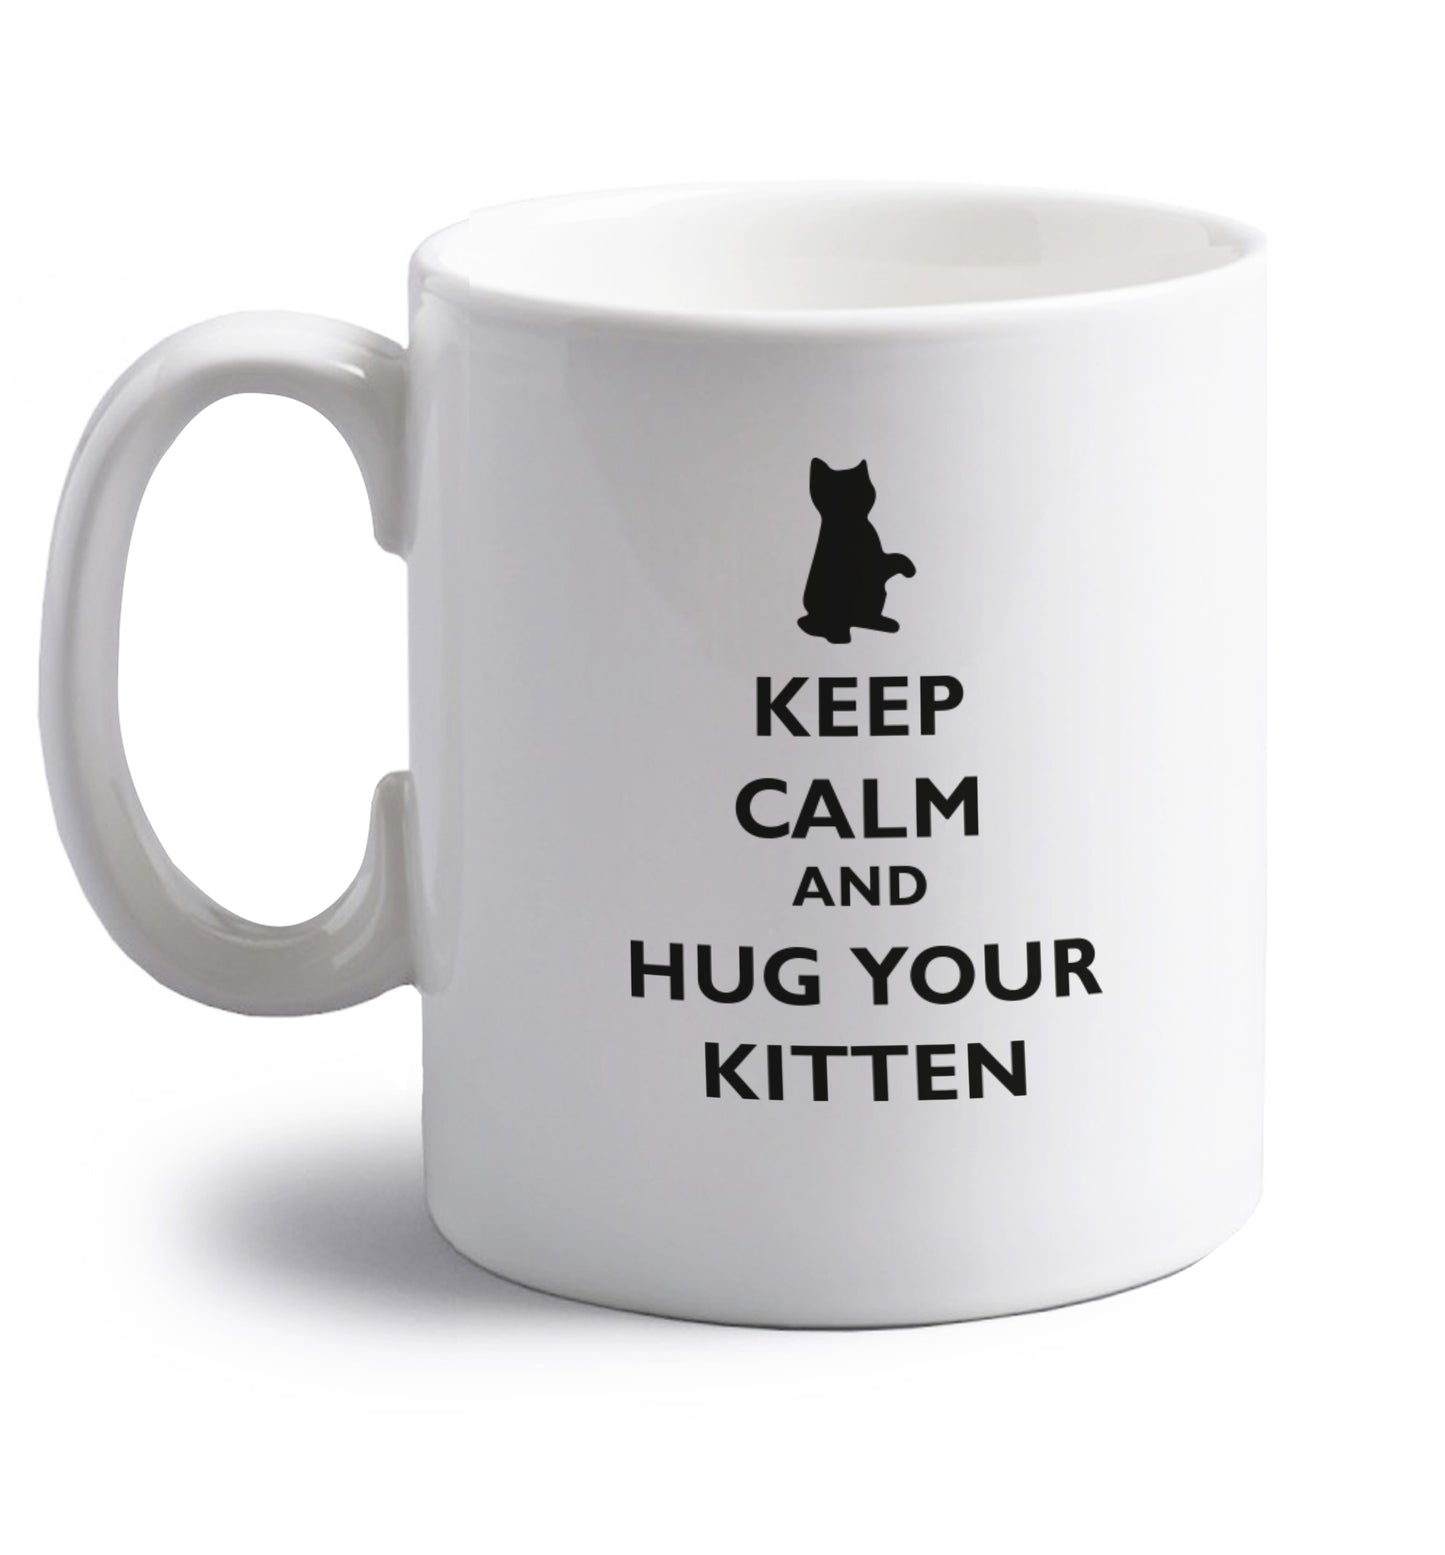 Keep calm and hug your kitten right handed white ceramic mug 